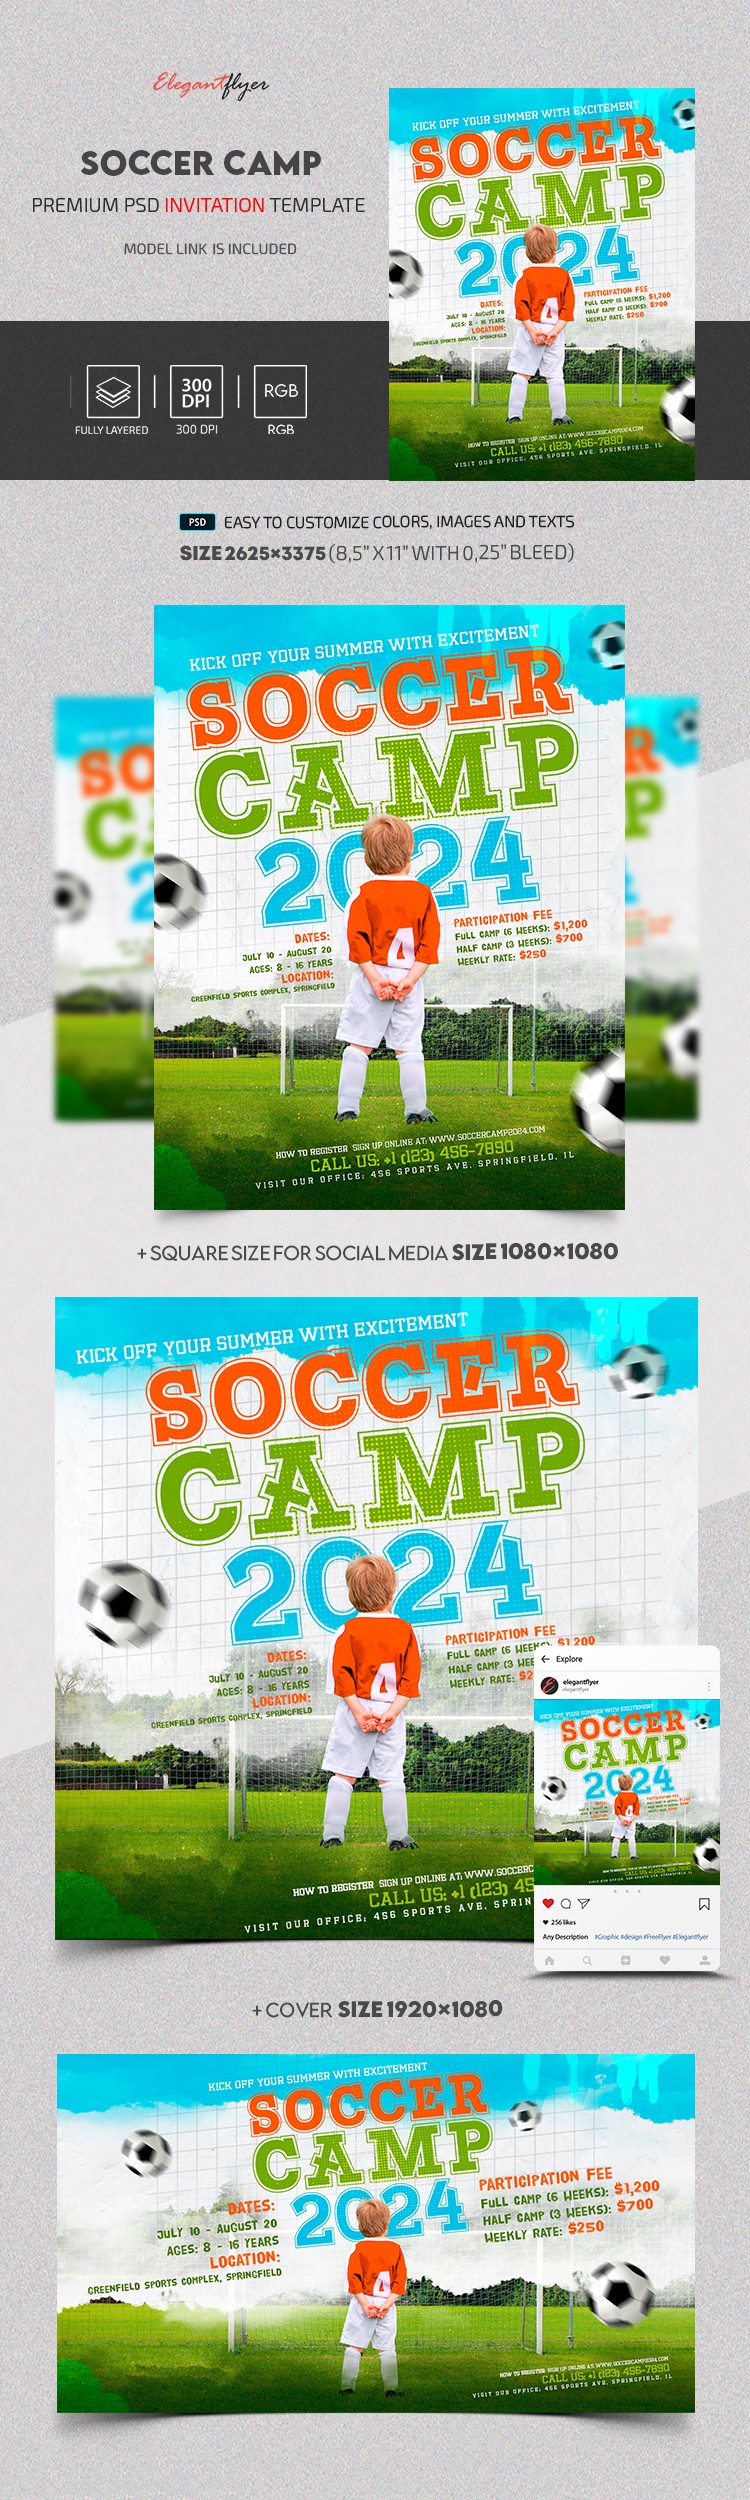 Soccer Camp by ElegantFlyer